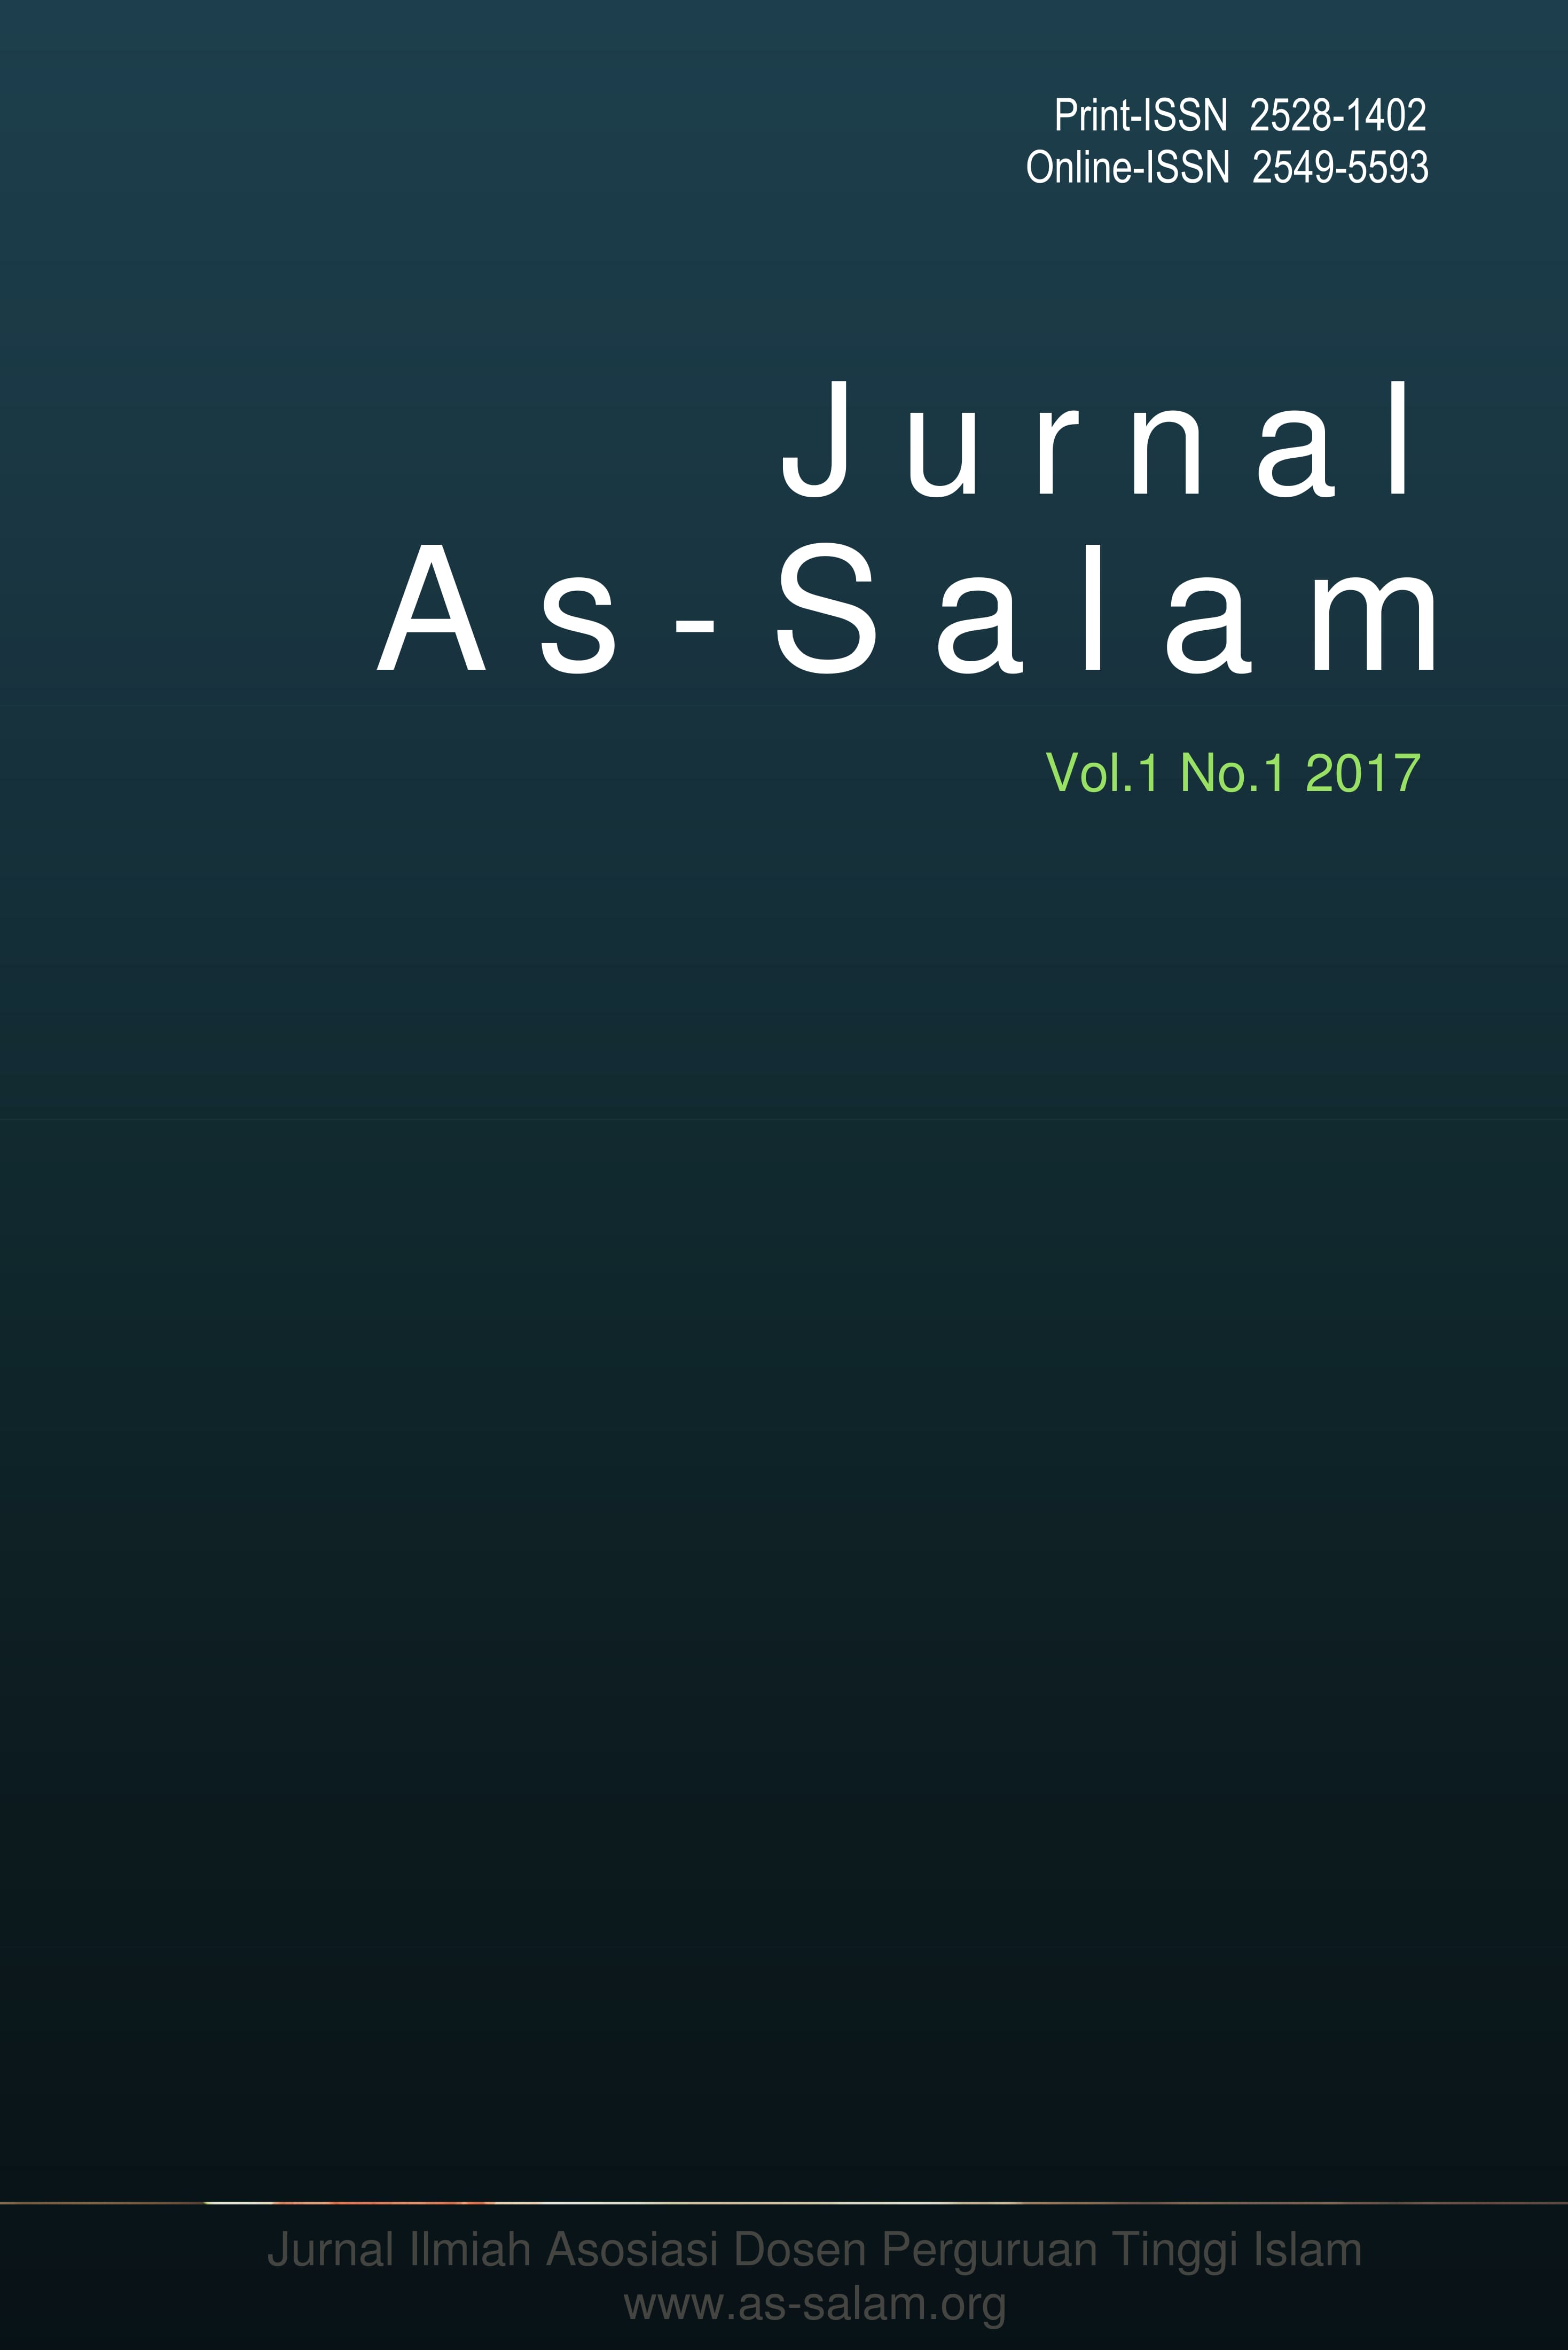 					View Vol. 1 No. 1 (2017): Jurnal As-Salam
				